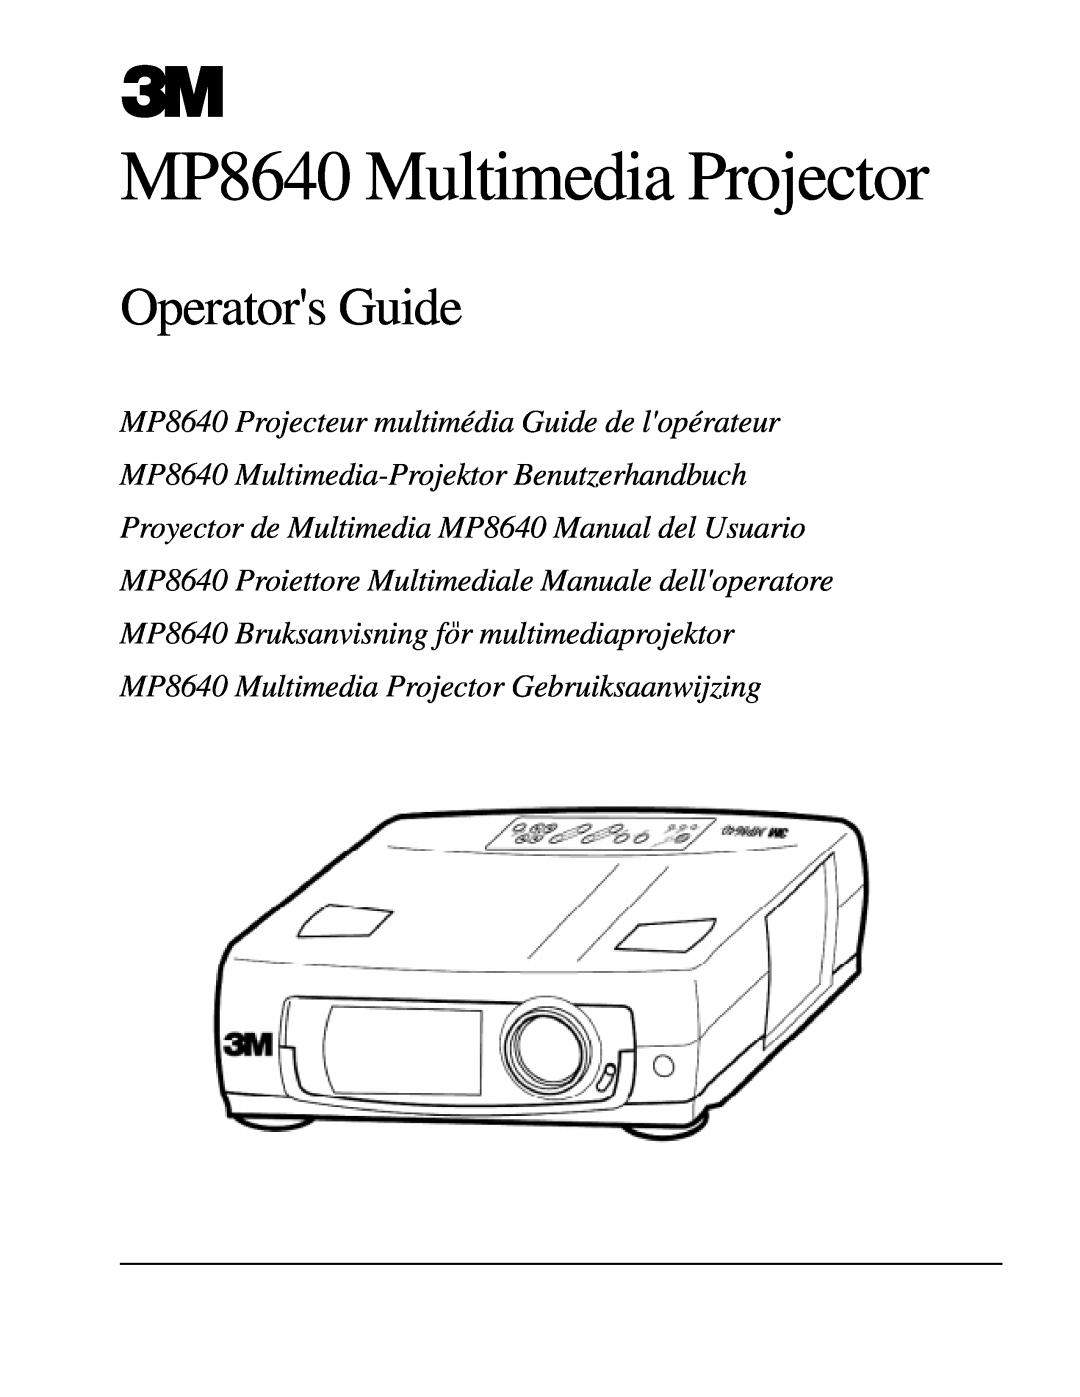 3M manual MP8640 Multimedia Projector, Operators Guide 